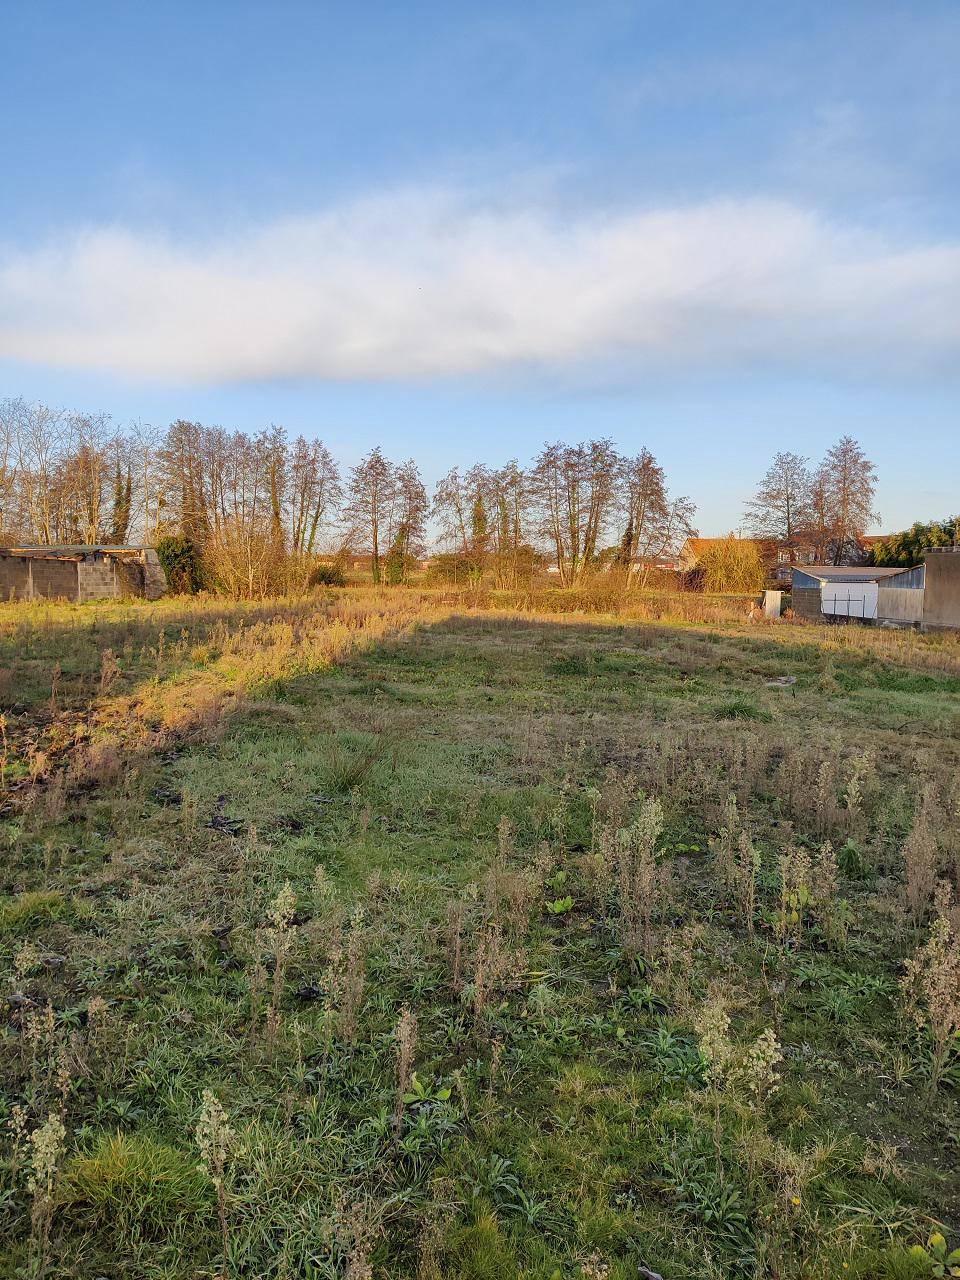 Terrain seul à Fatines en Sarthe (72) de 450 m² à vendre au prix de 30000€ - 2